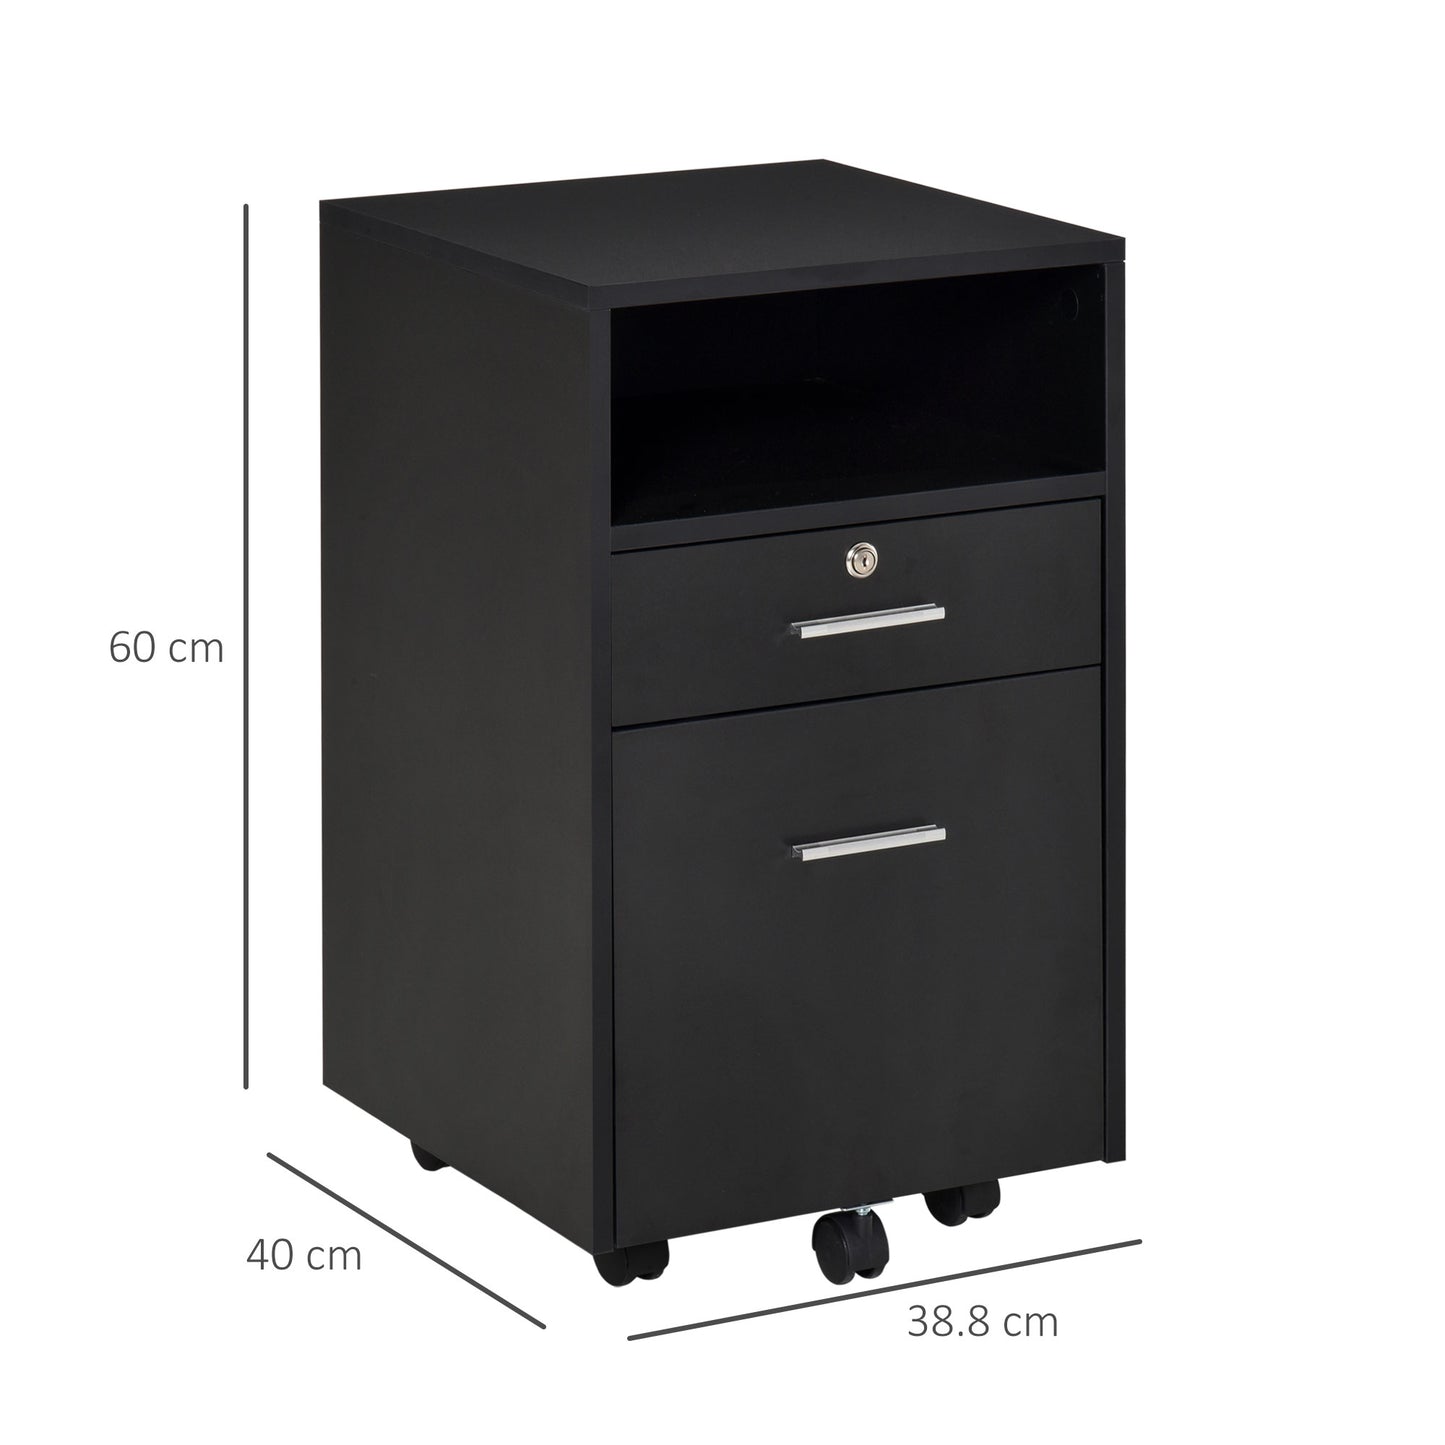 Vinsetto Mobile File Cabinet Home Filing Furniture w/ Lock, Adjustable Partition